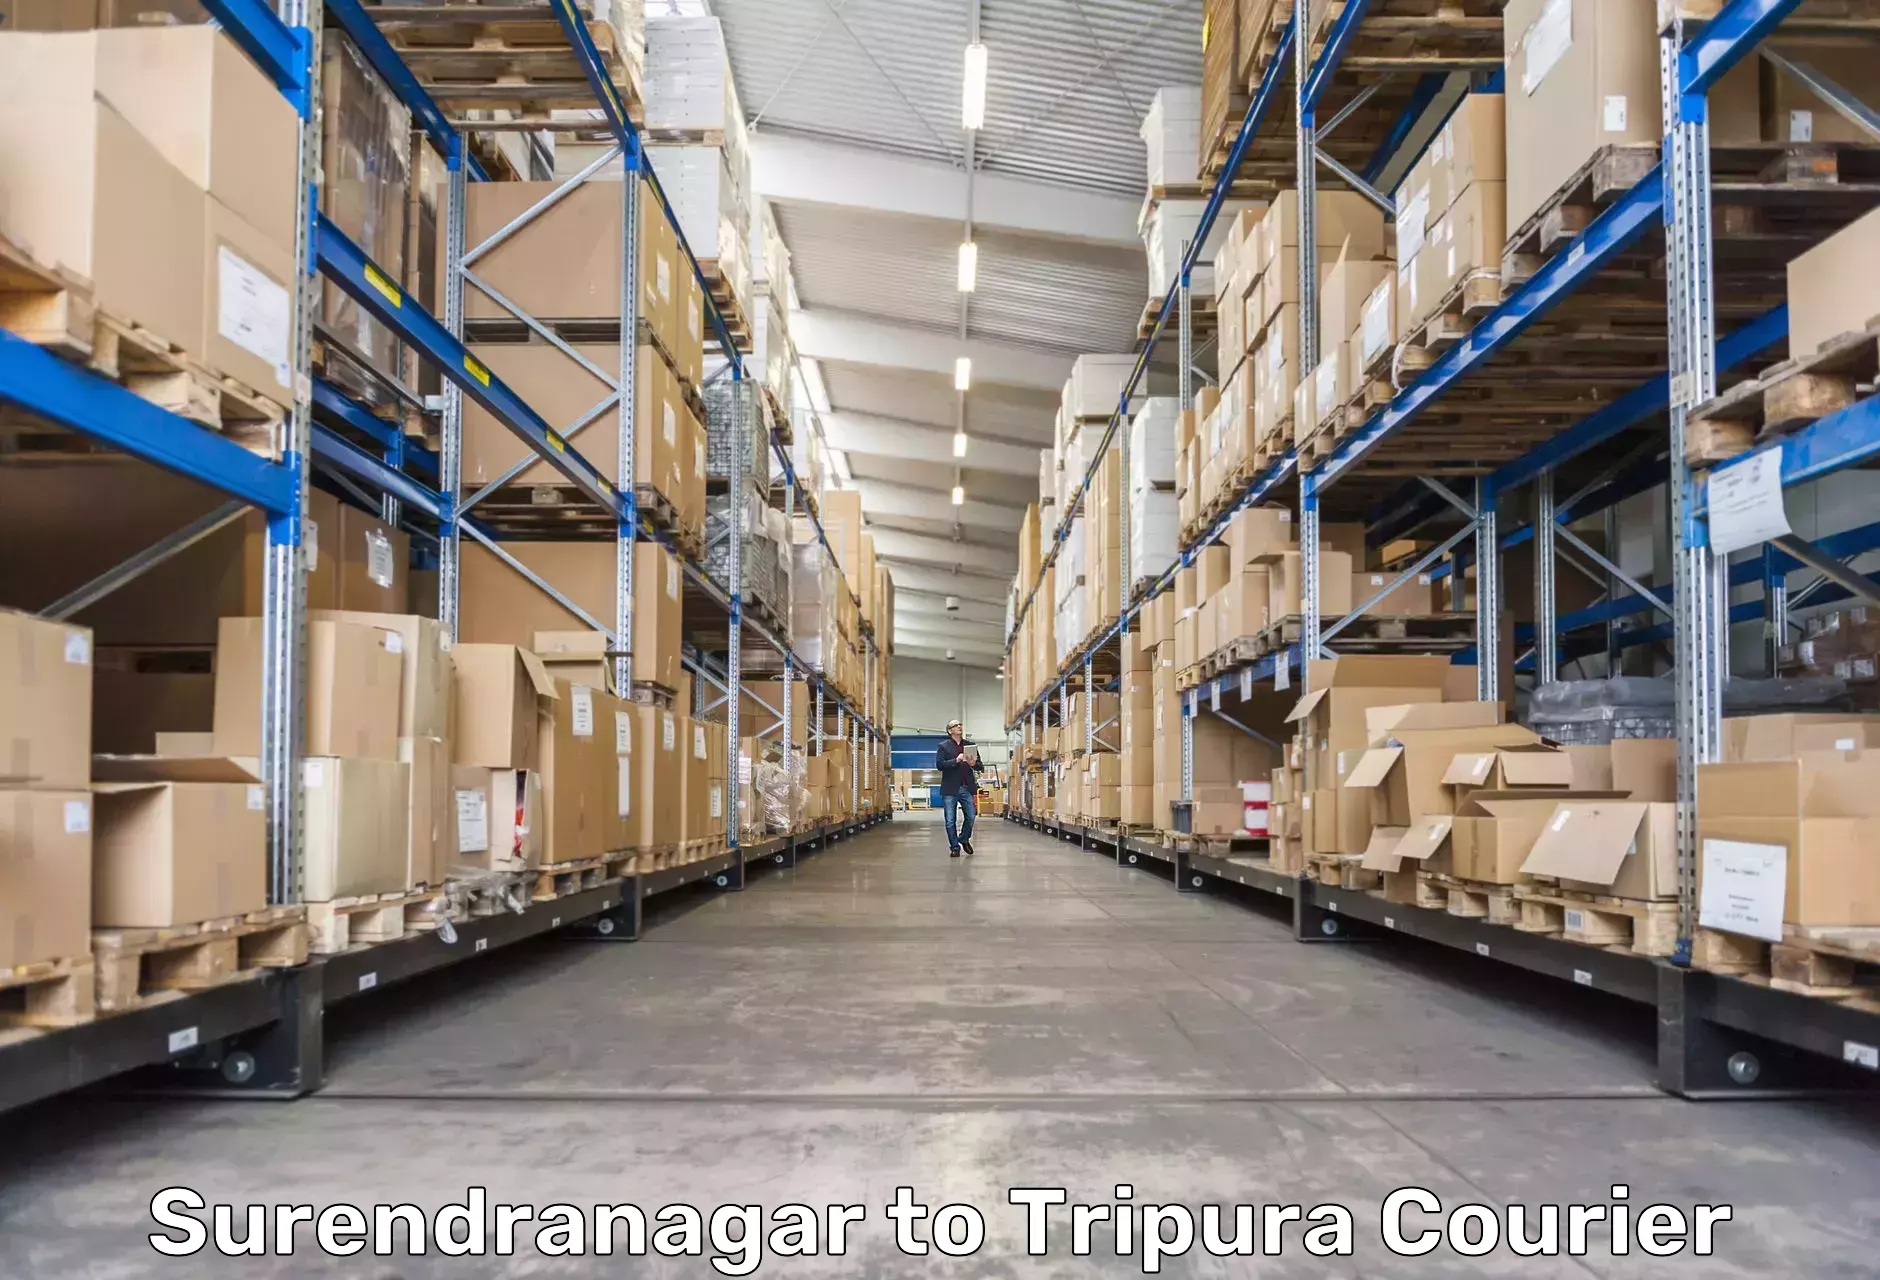 Courier rate comparison Surendranagar to Udaipur Tripura